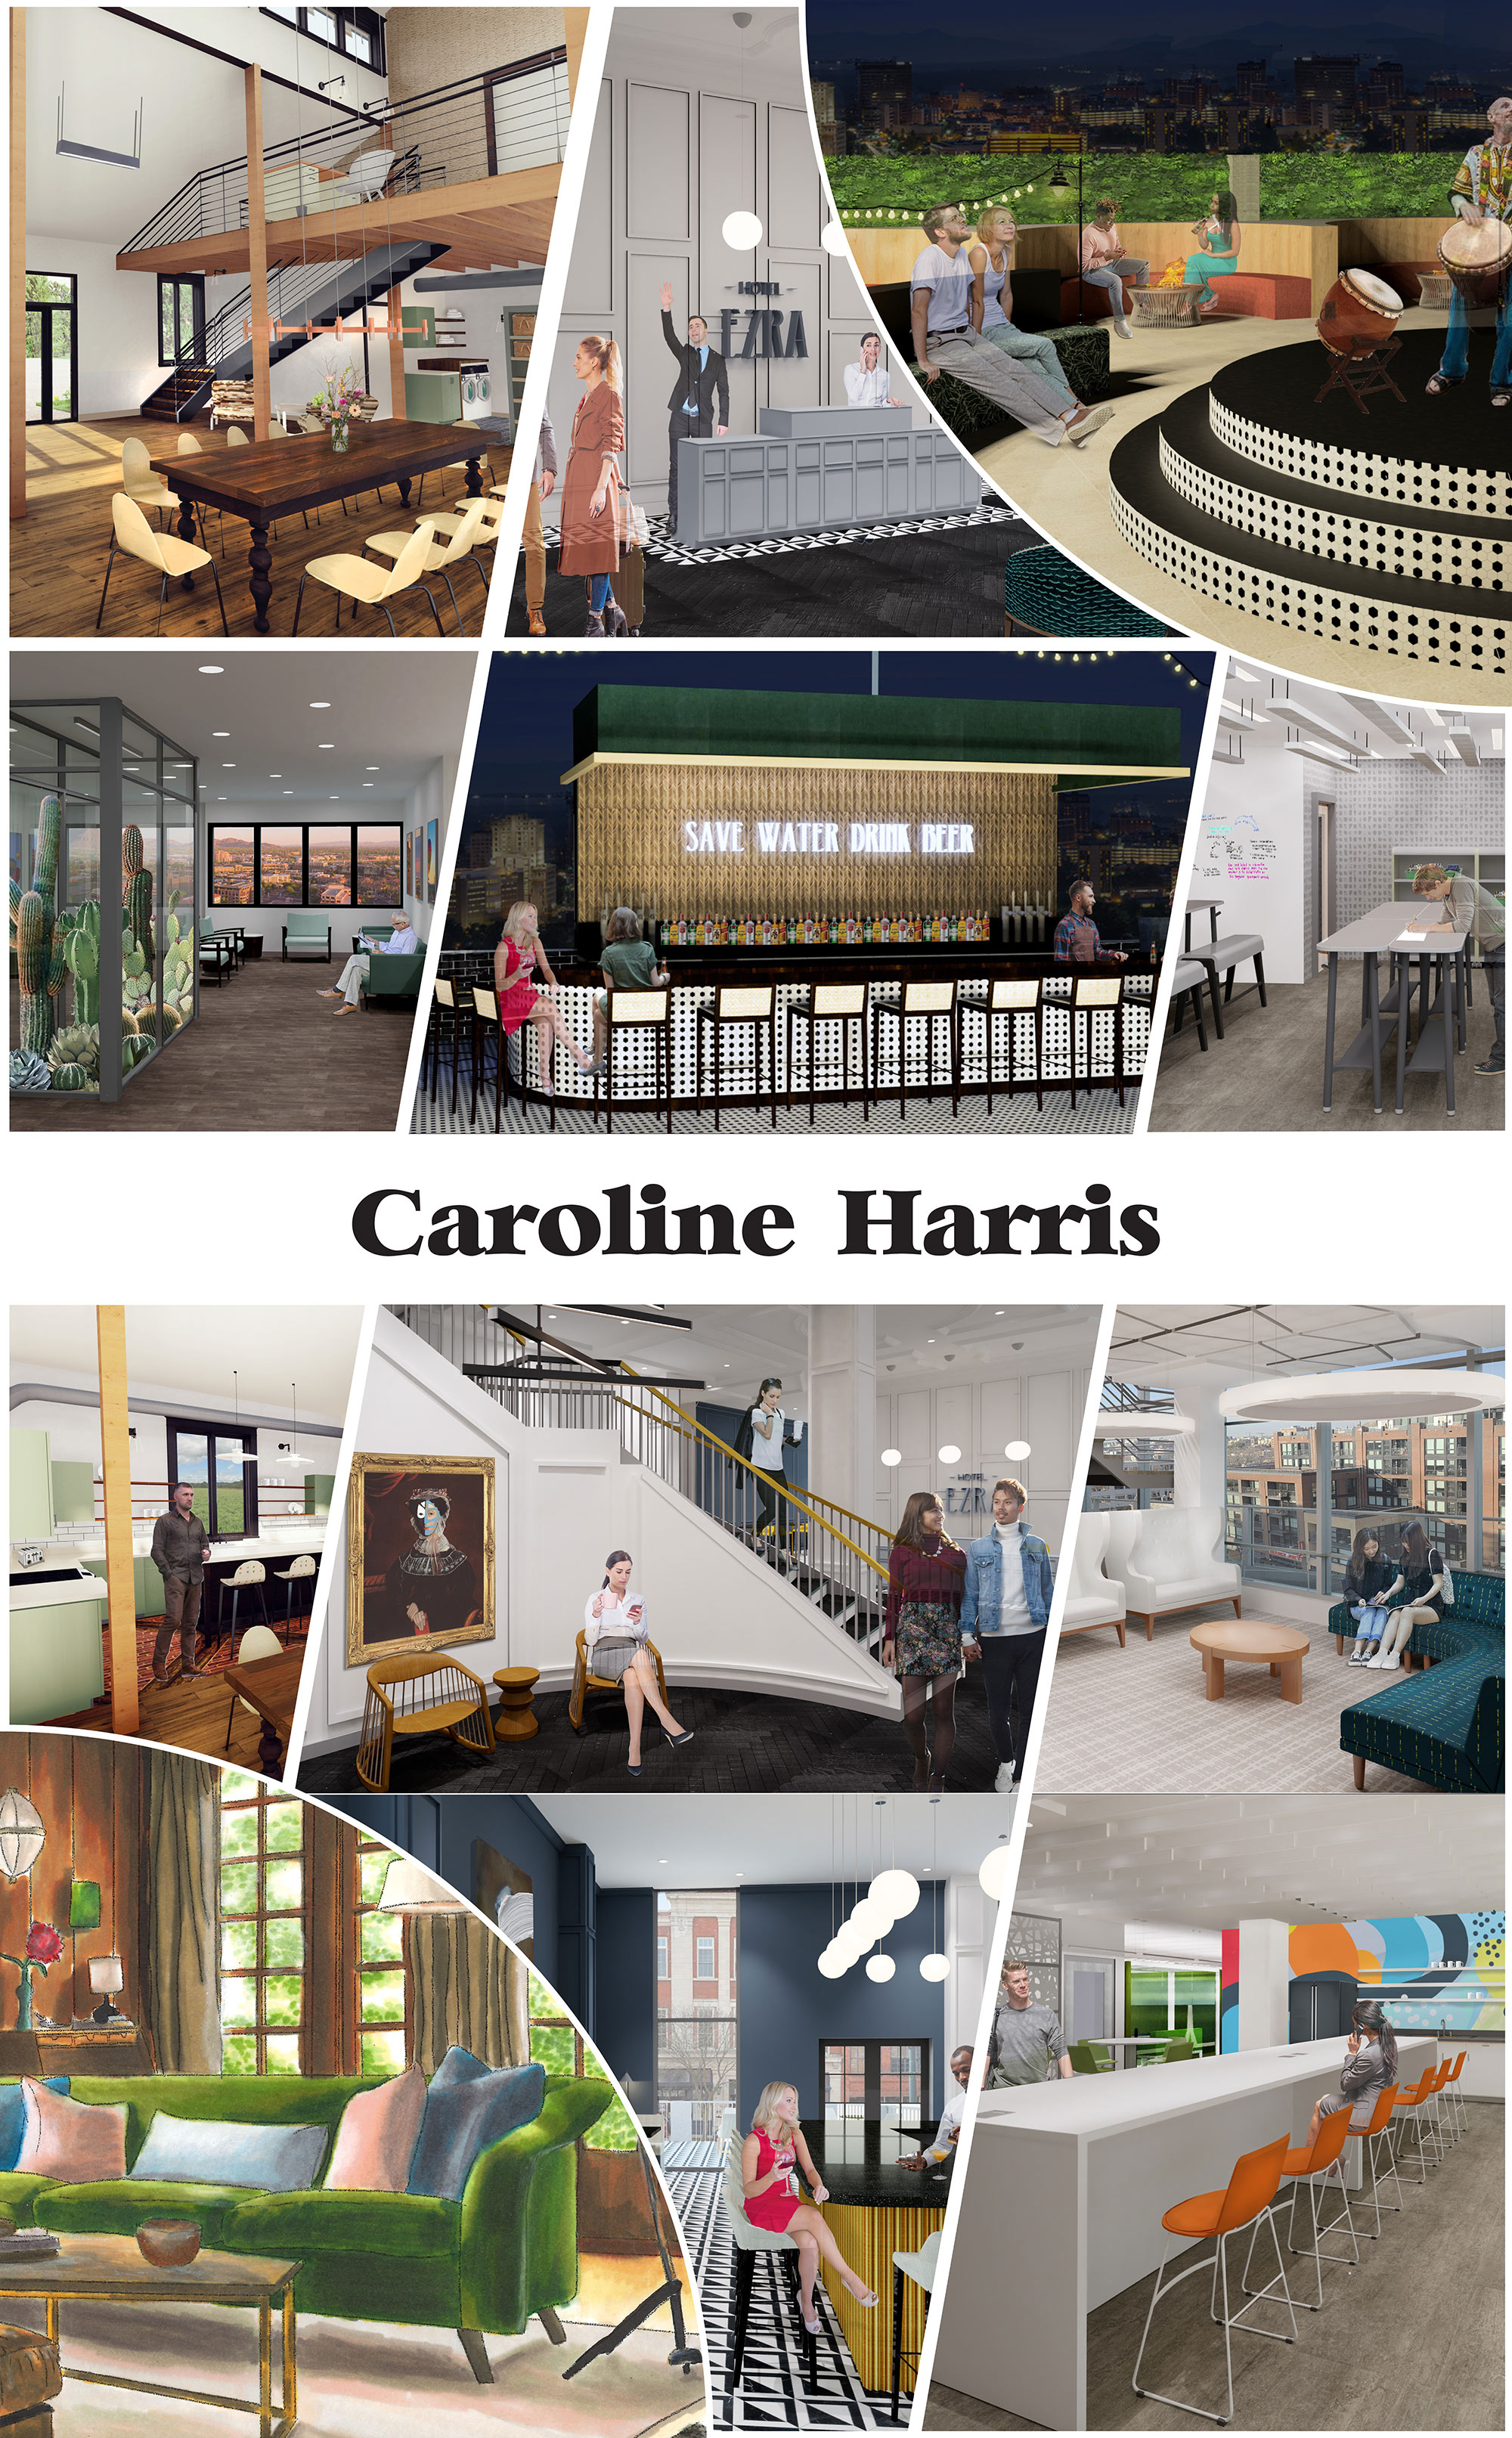 Caroline Harris's senior exhibit board